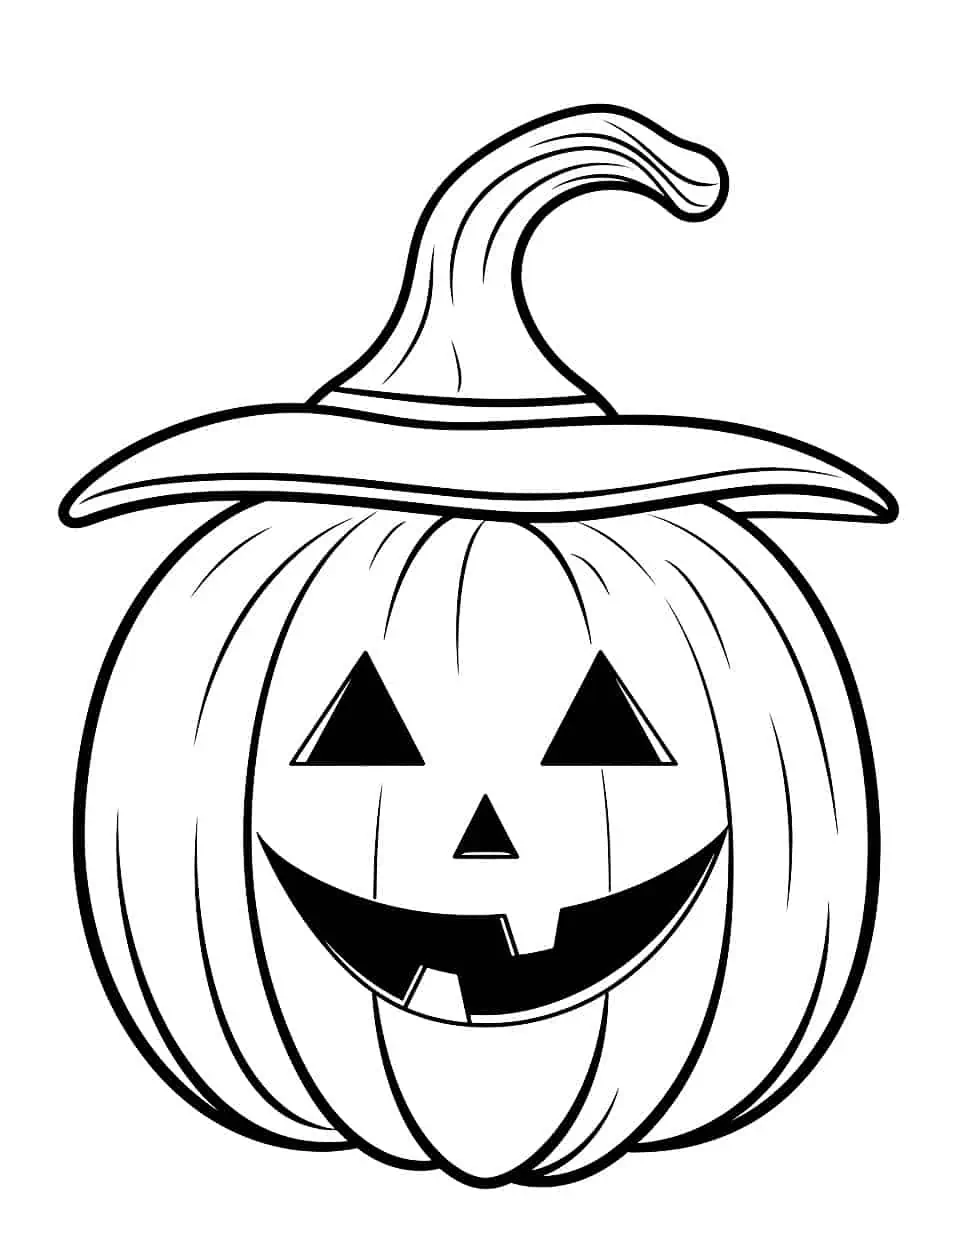 Pumpkin coloring pages free printable sheets